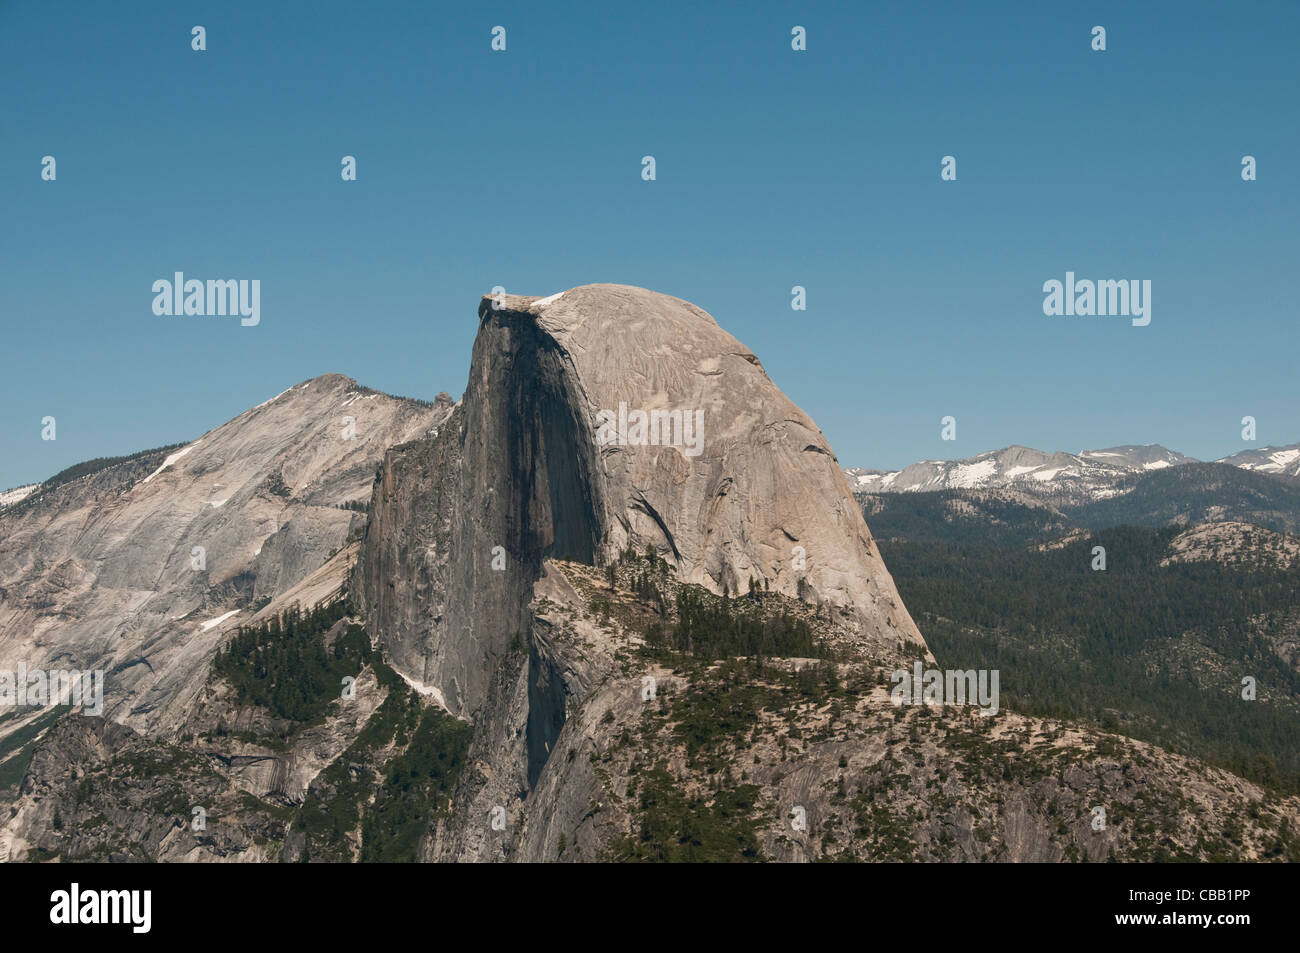 Half Dome, from Glacier Point, Yosemite National Park, California, USA. Photo copyright Lee Foster. Photo # california122343 Stock Photo